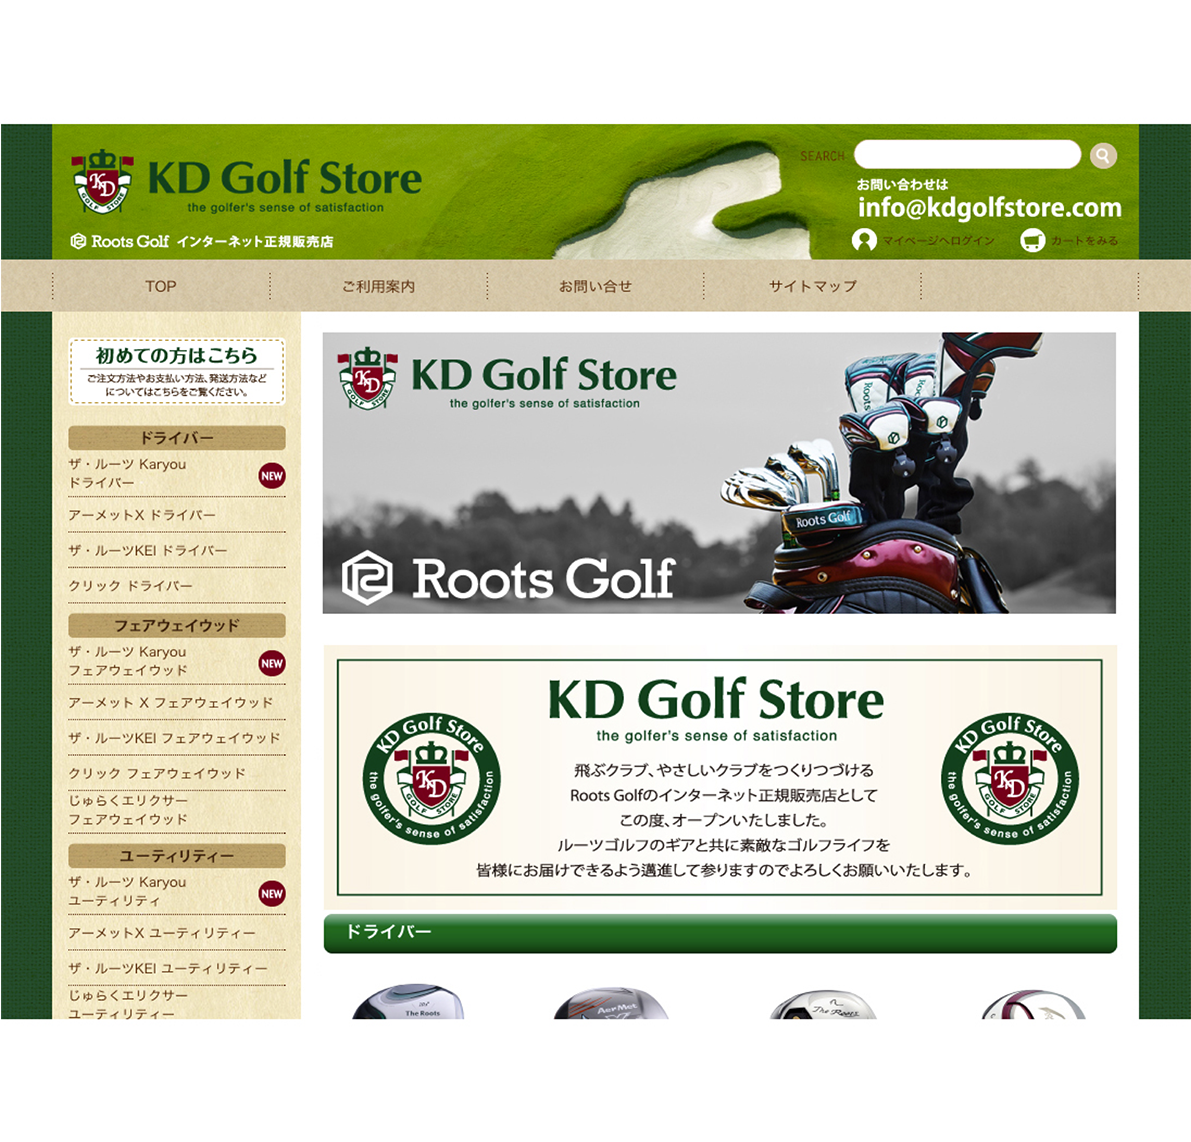 KD Golf Store